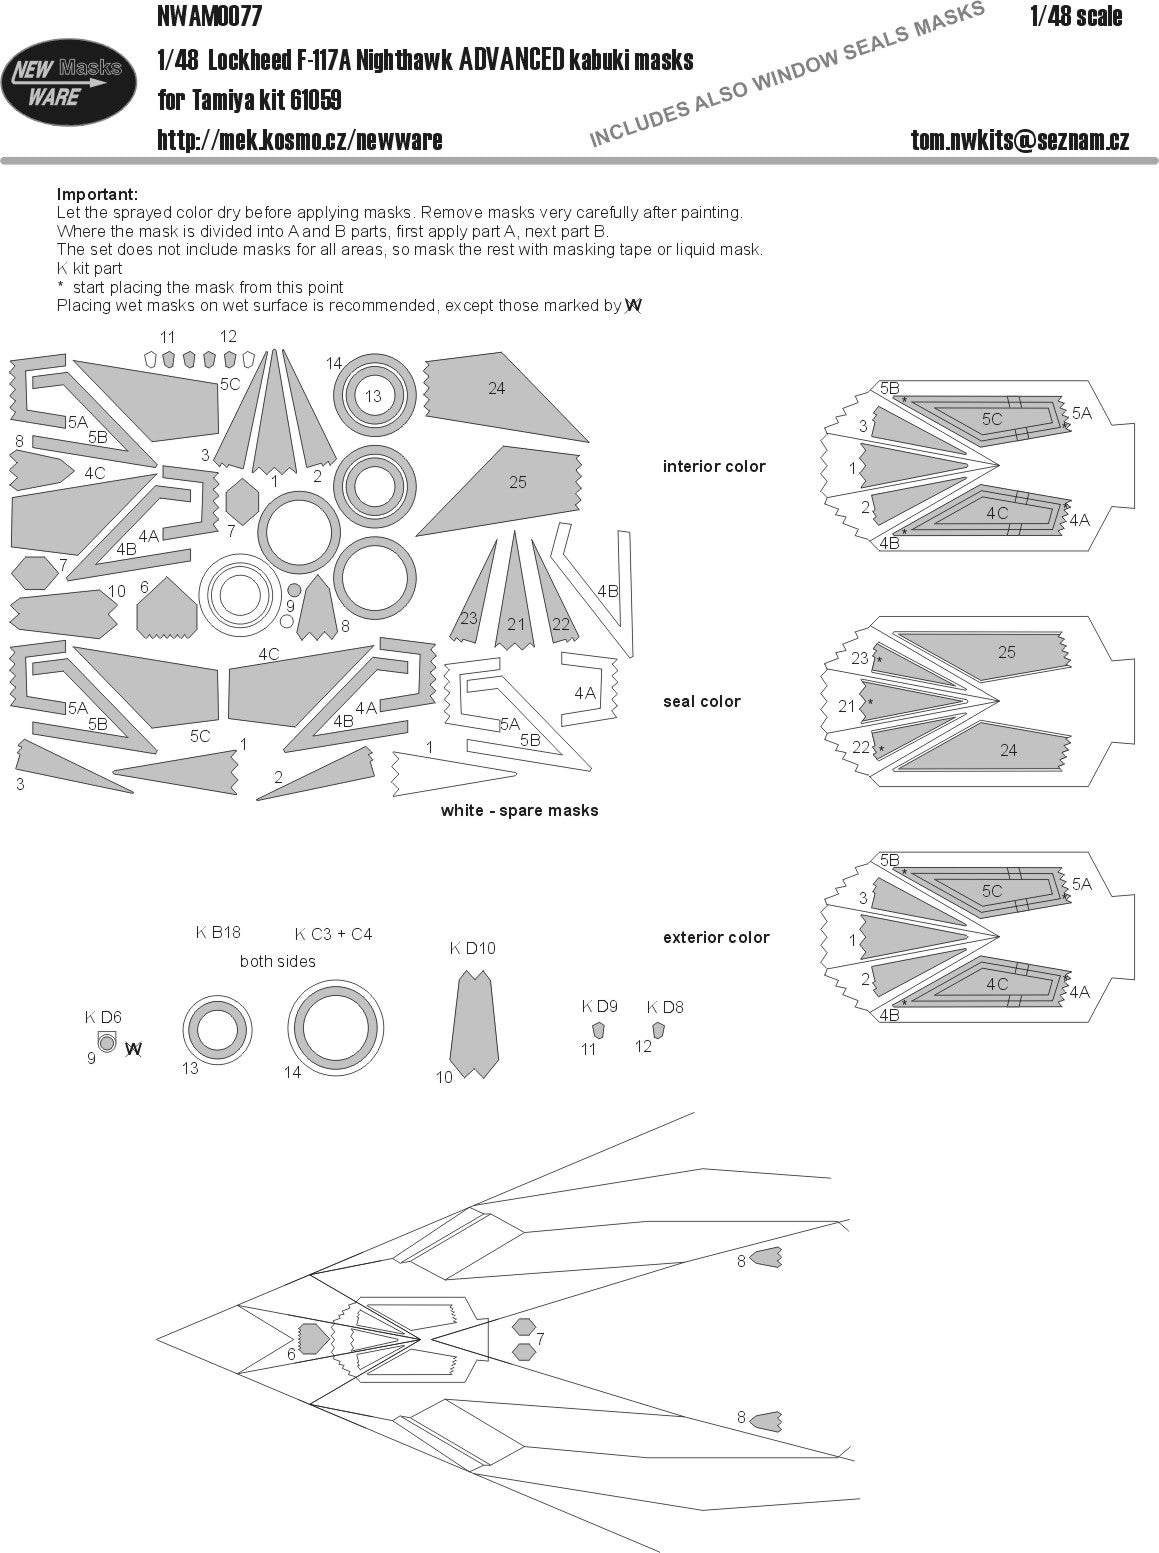 New Ware 0077 - Masking set for Tamiya 1/48 F-117A Nighthawk ADVANCED